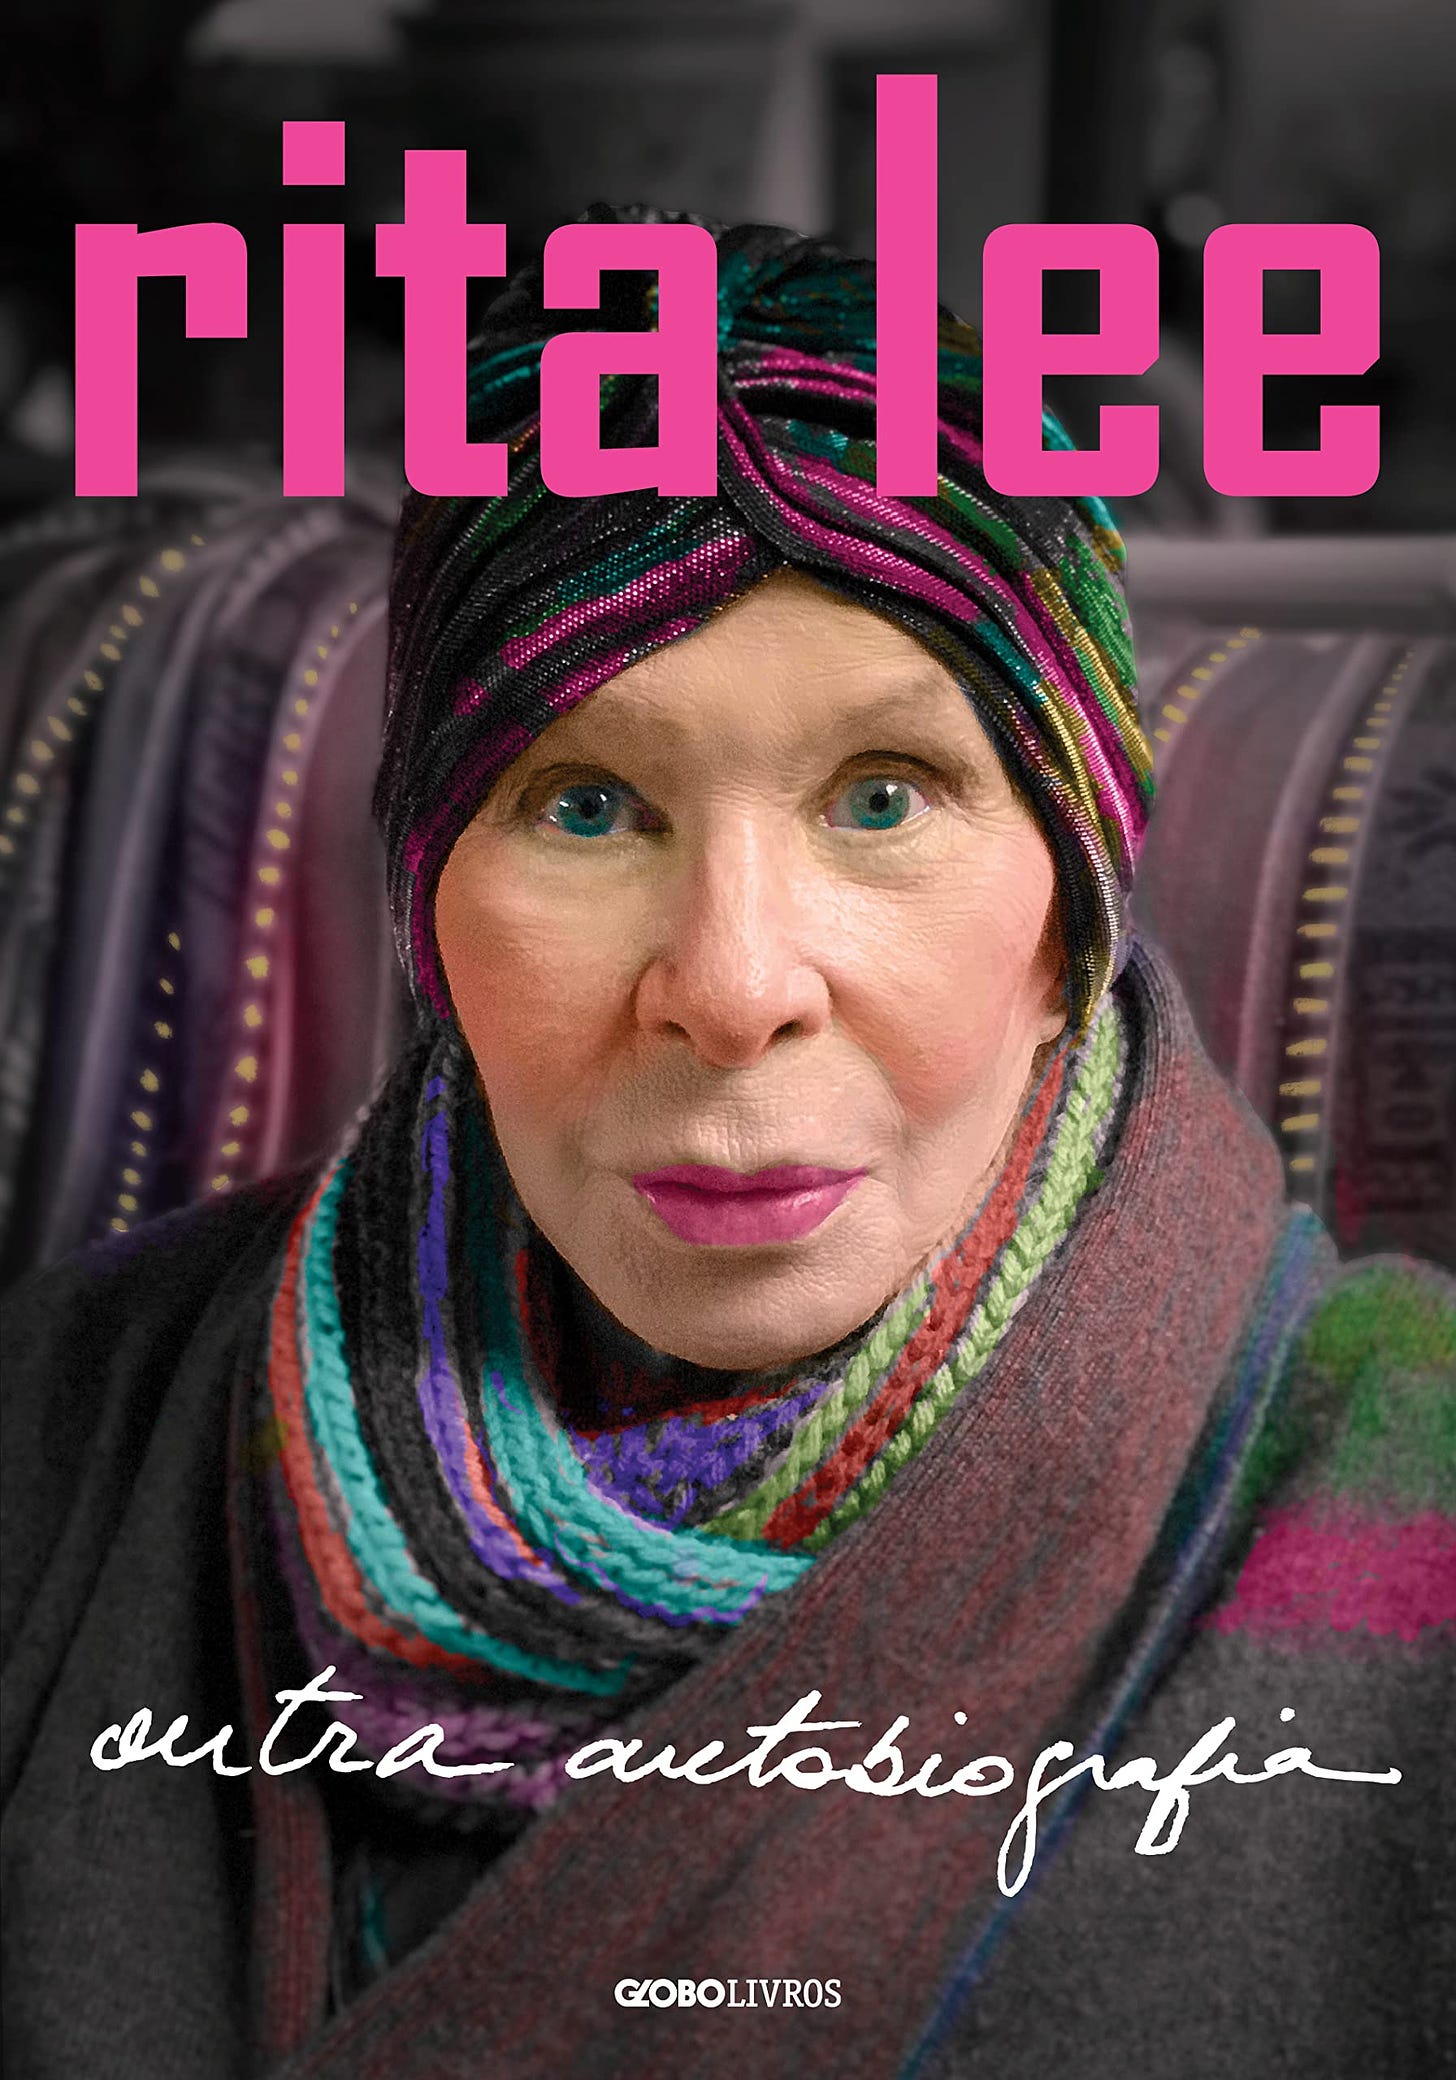 Rita Lee: Outra autobiografia by Rita Lee | Goodreads